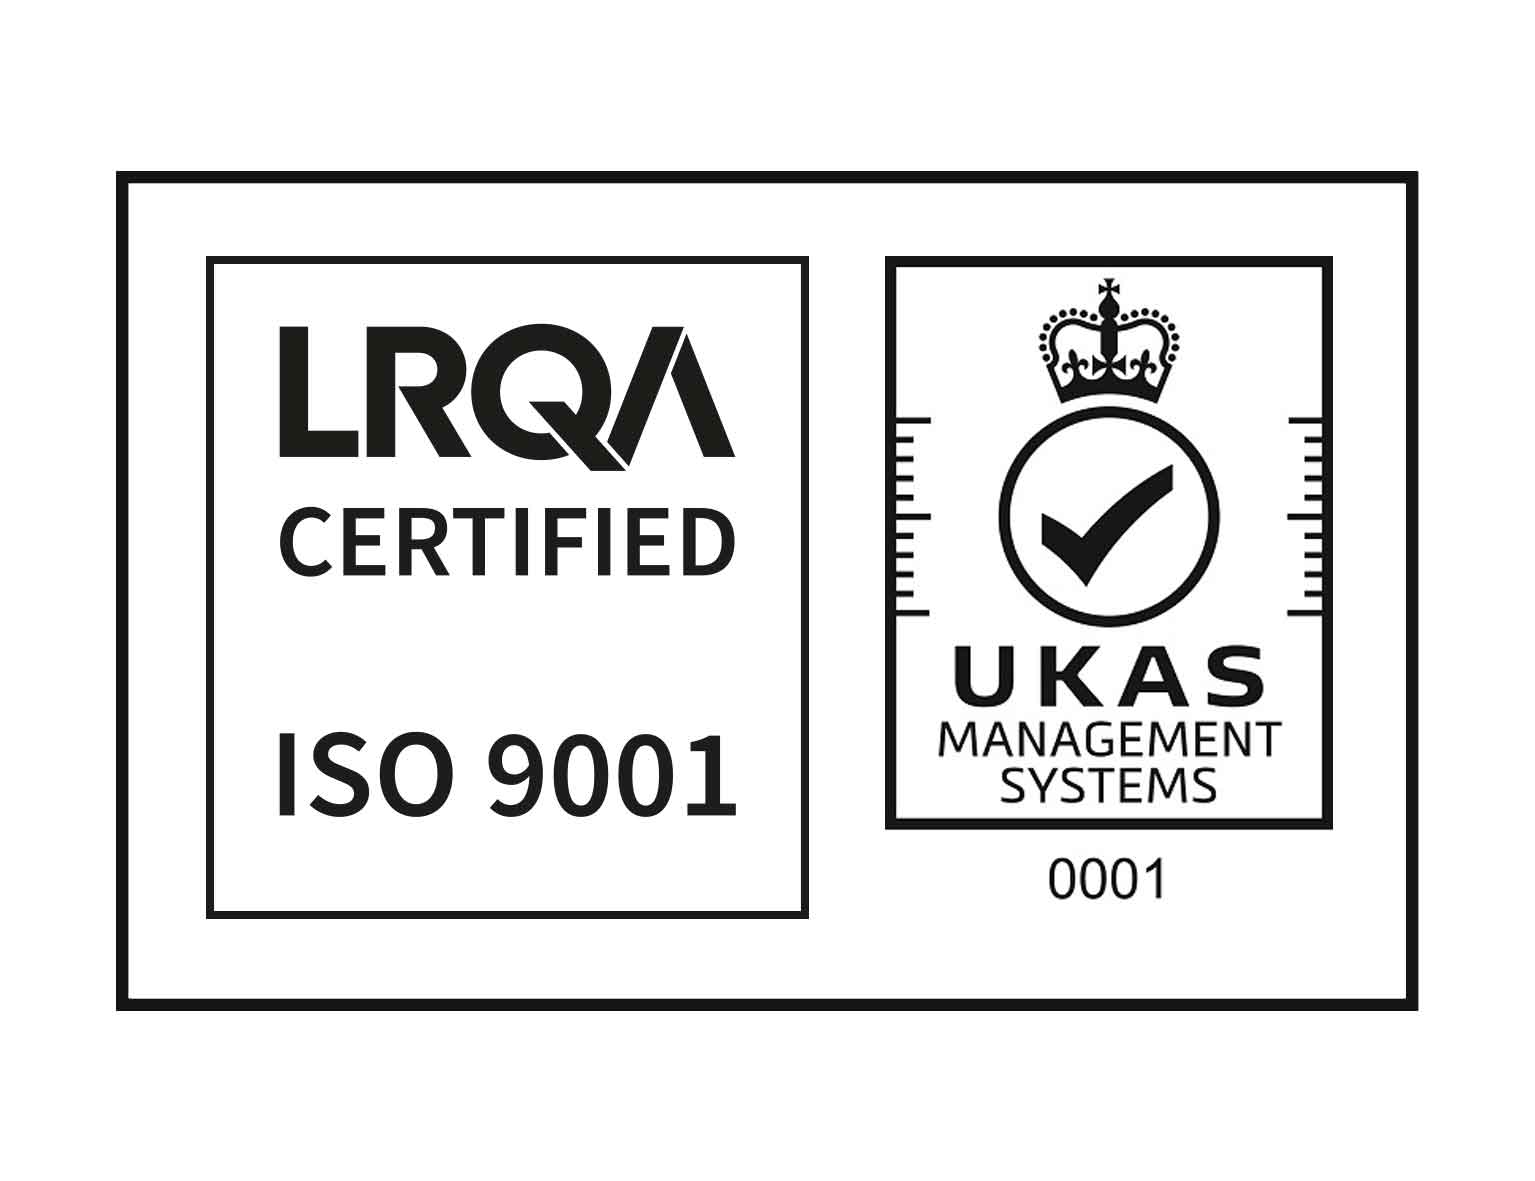 Lloyds Register Certification